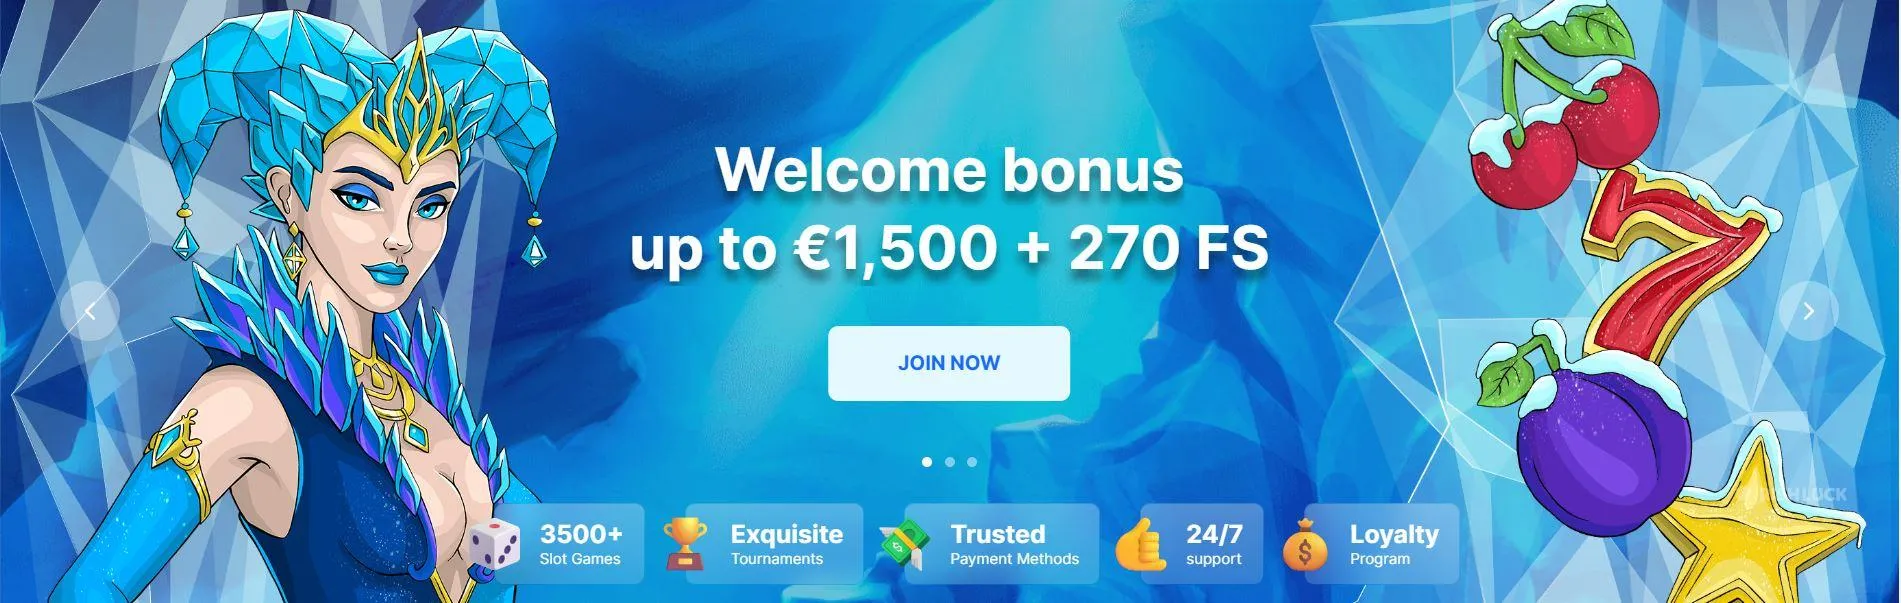 ice casino welcome bonus ireland welcome bonuses ireland online casino free spins